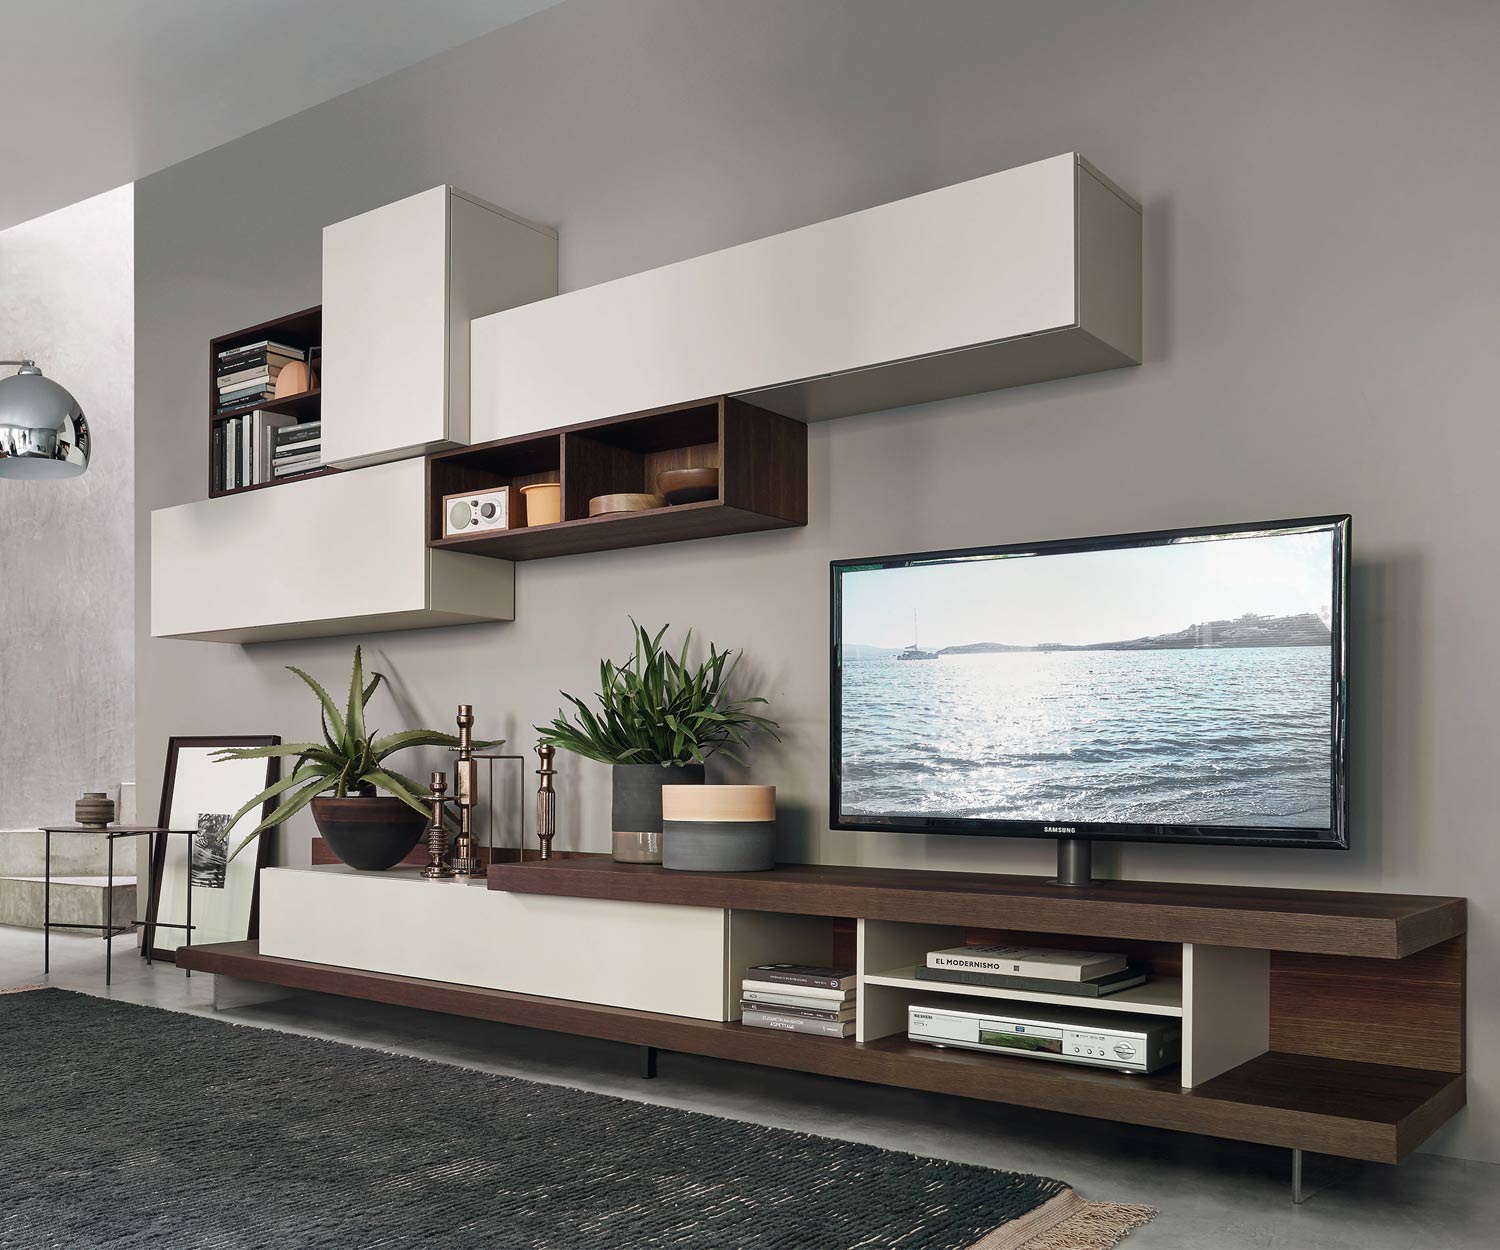 Exclusif Ouvert Livitalia Design Design Lowboard Open avec support TV